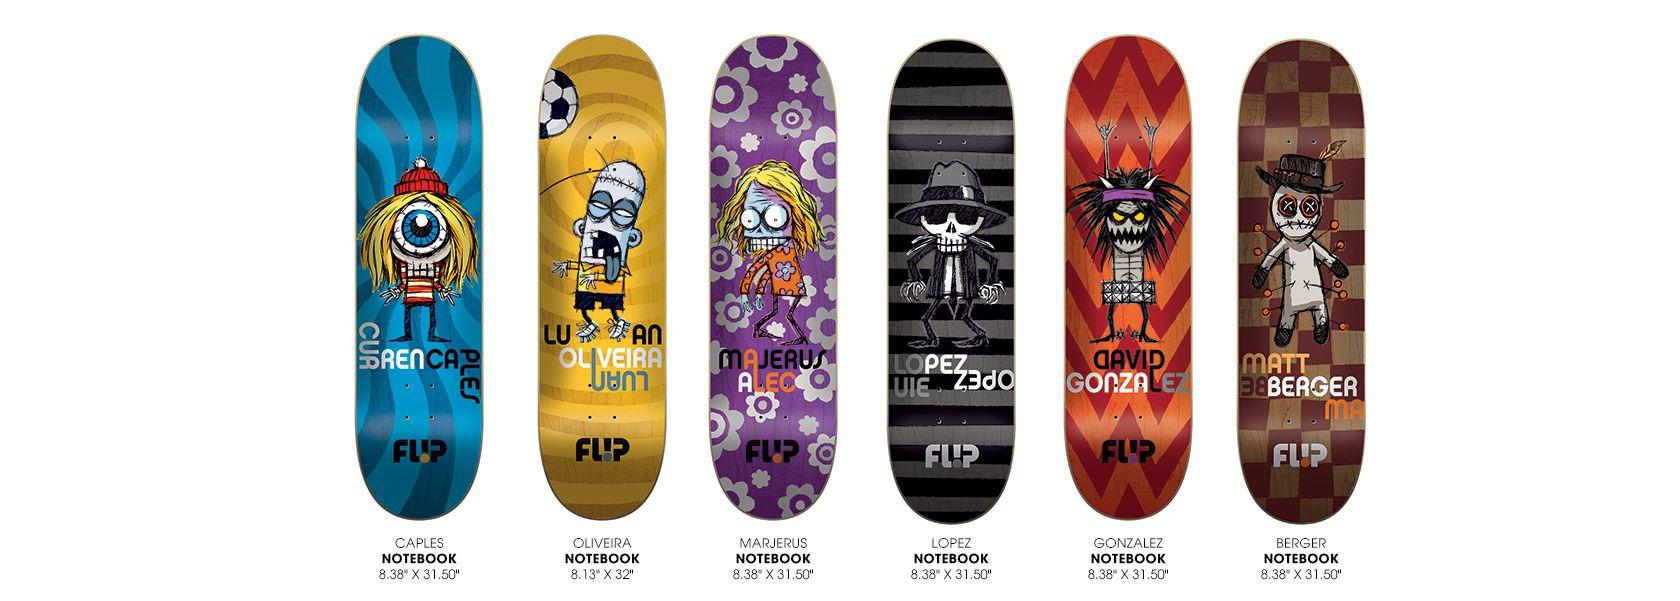 Flip Skateboard Logo - Flip Skateboards | The Official Website of Flip Skateboards